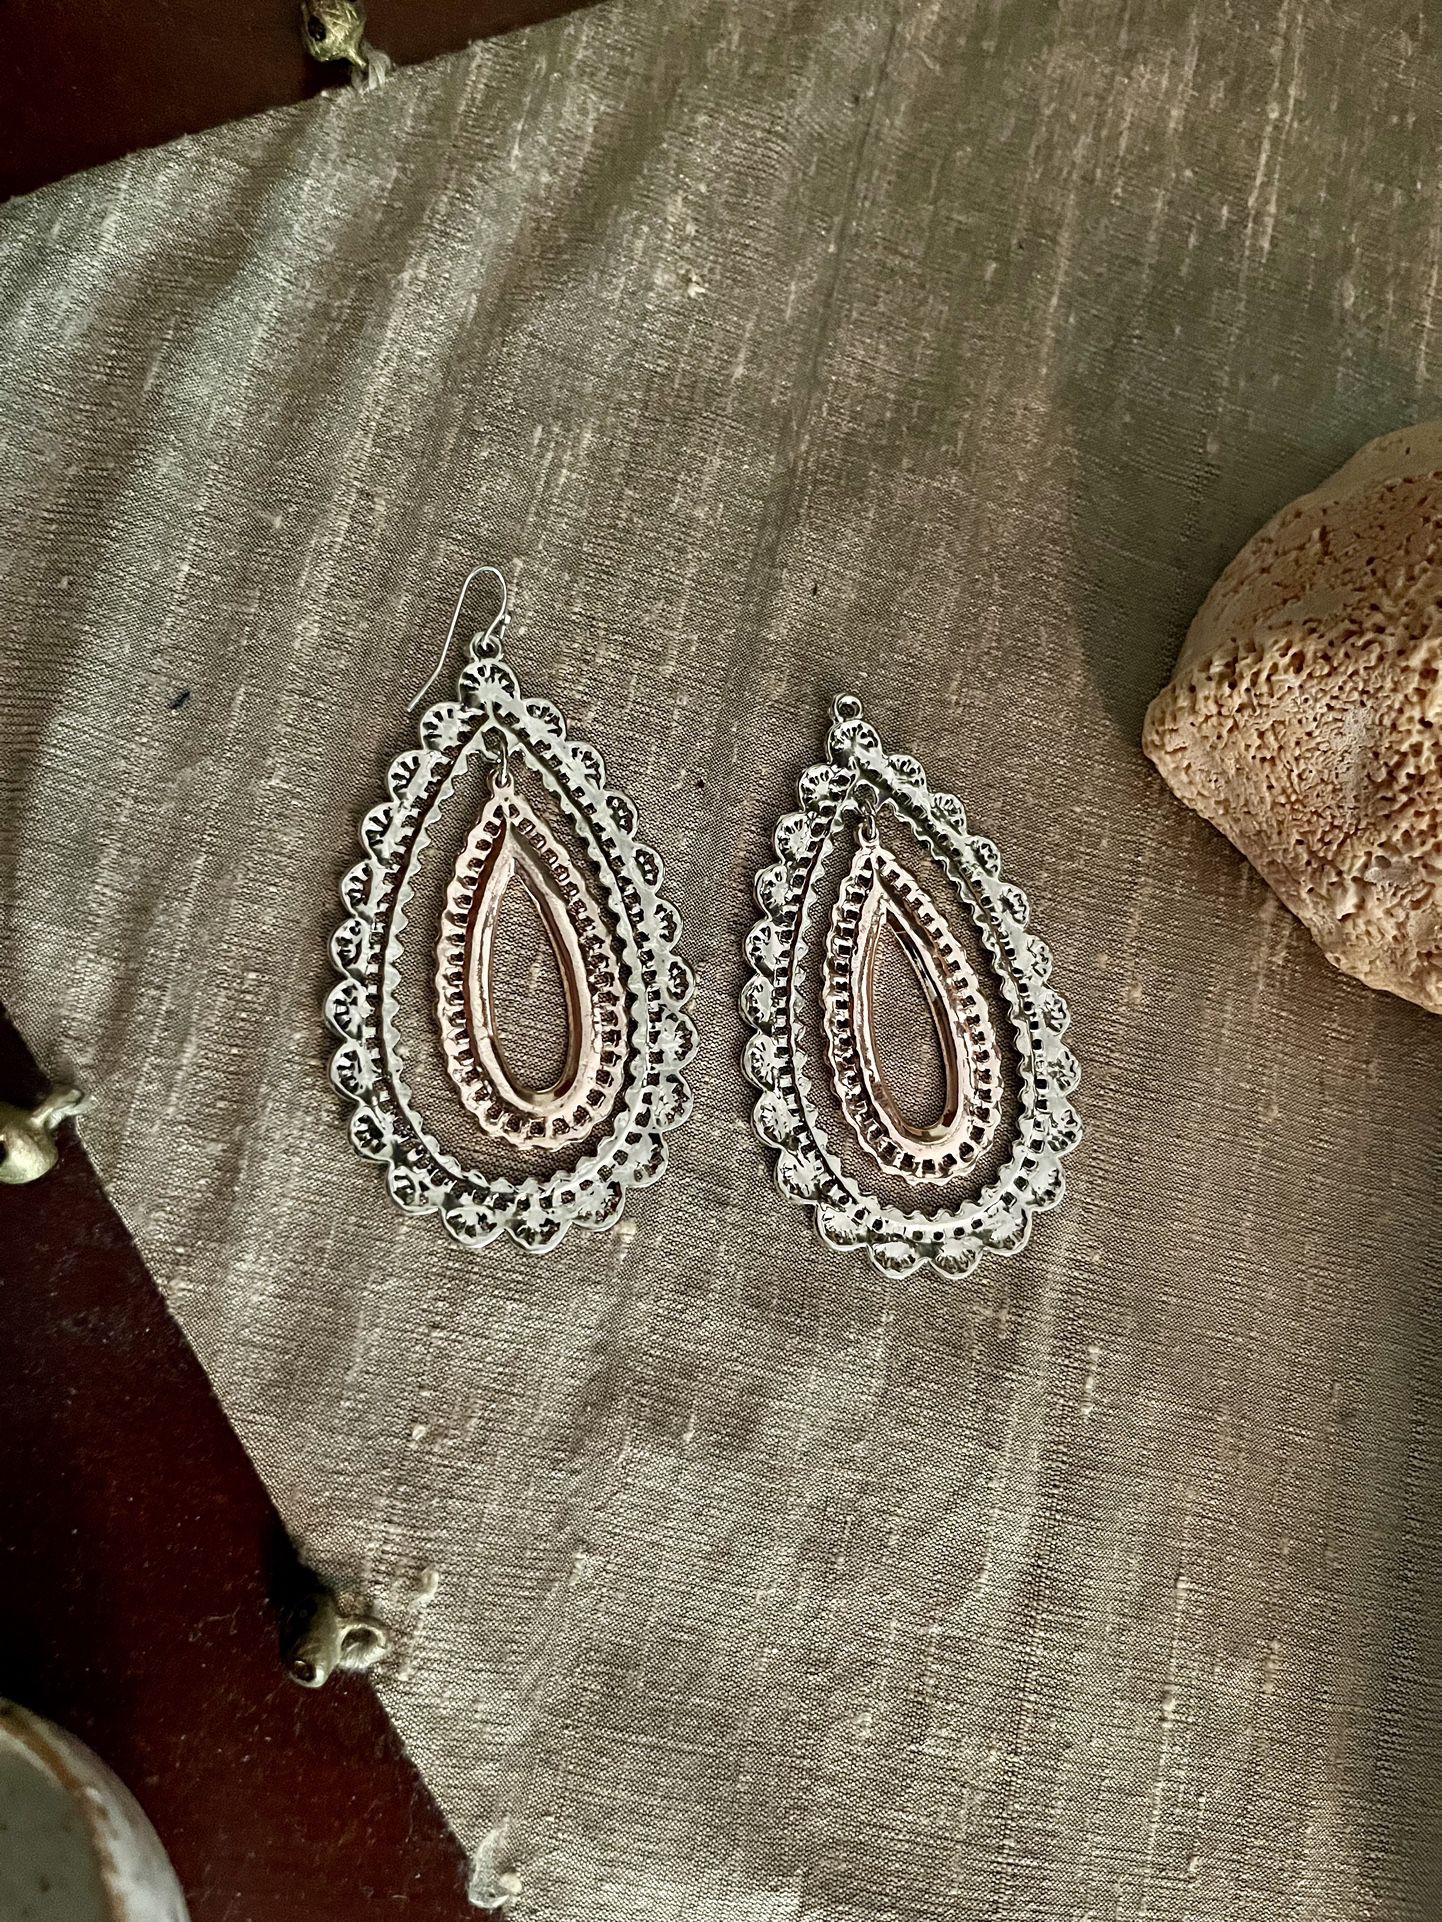 striking large shiny silvery, coppery, and diamond teardrop earrings